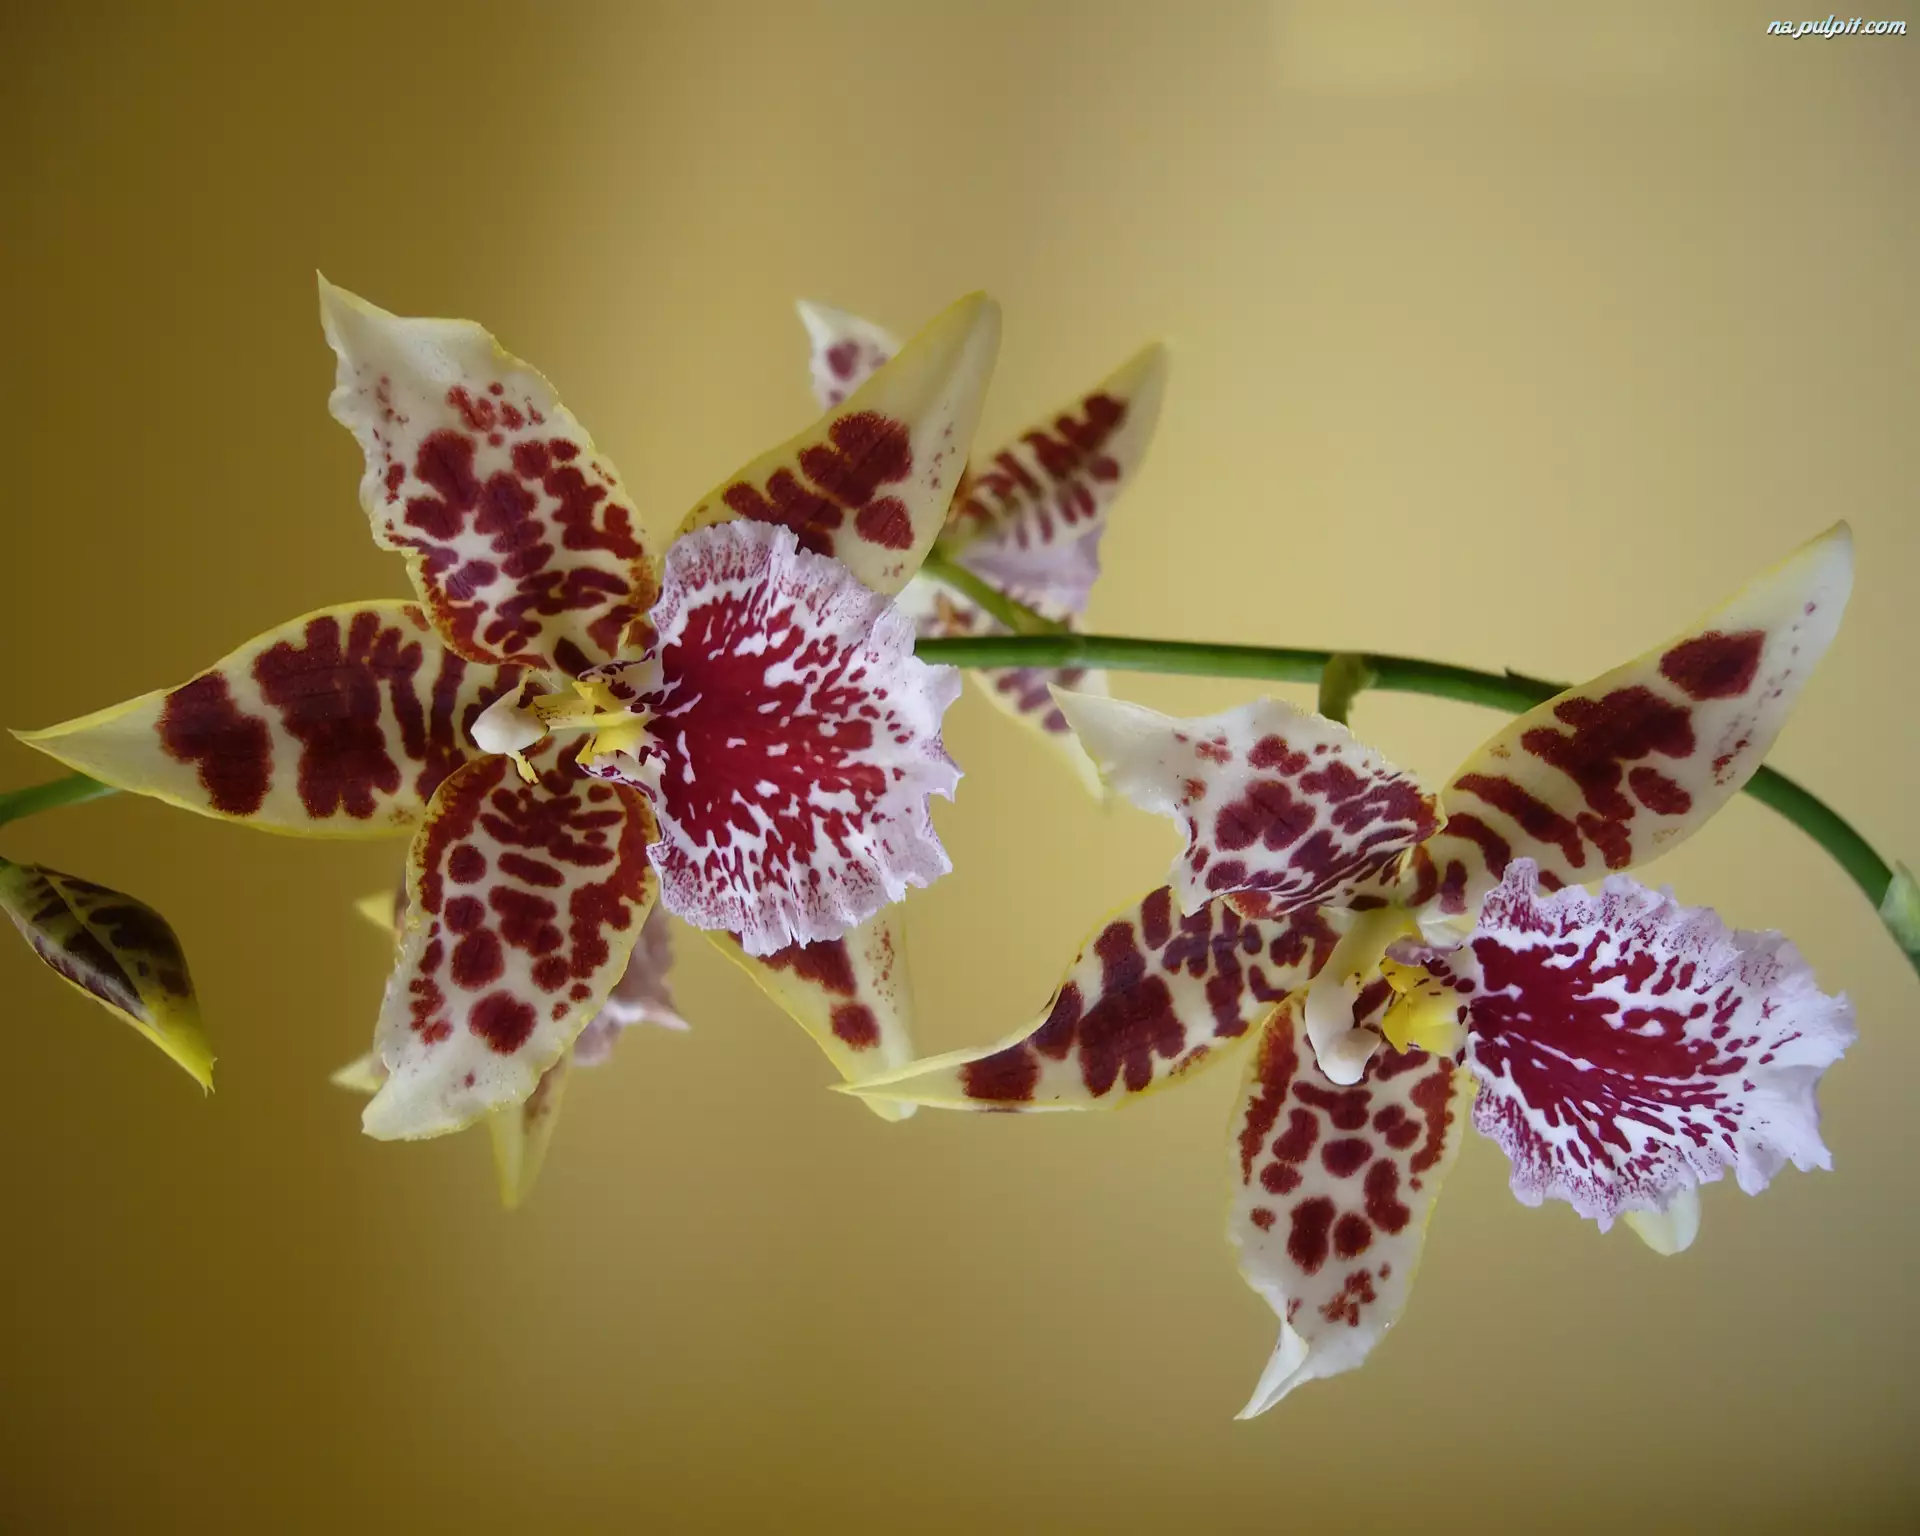 Orchidea, Piękna